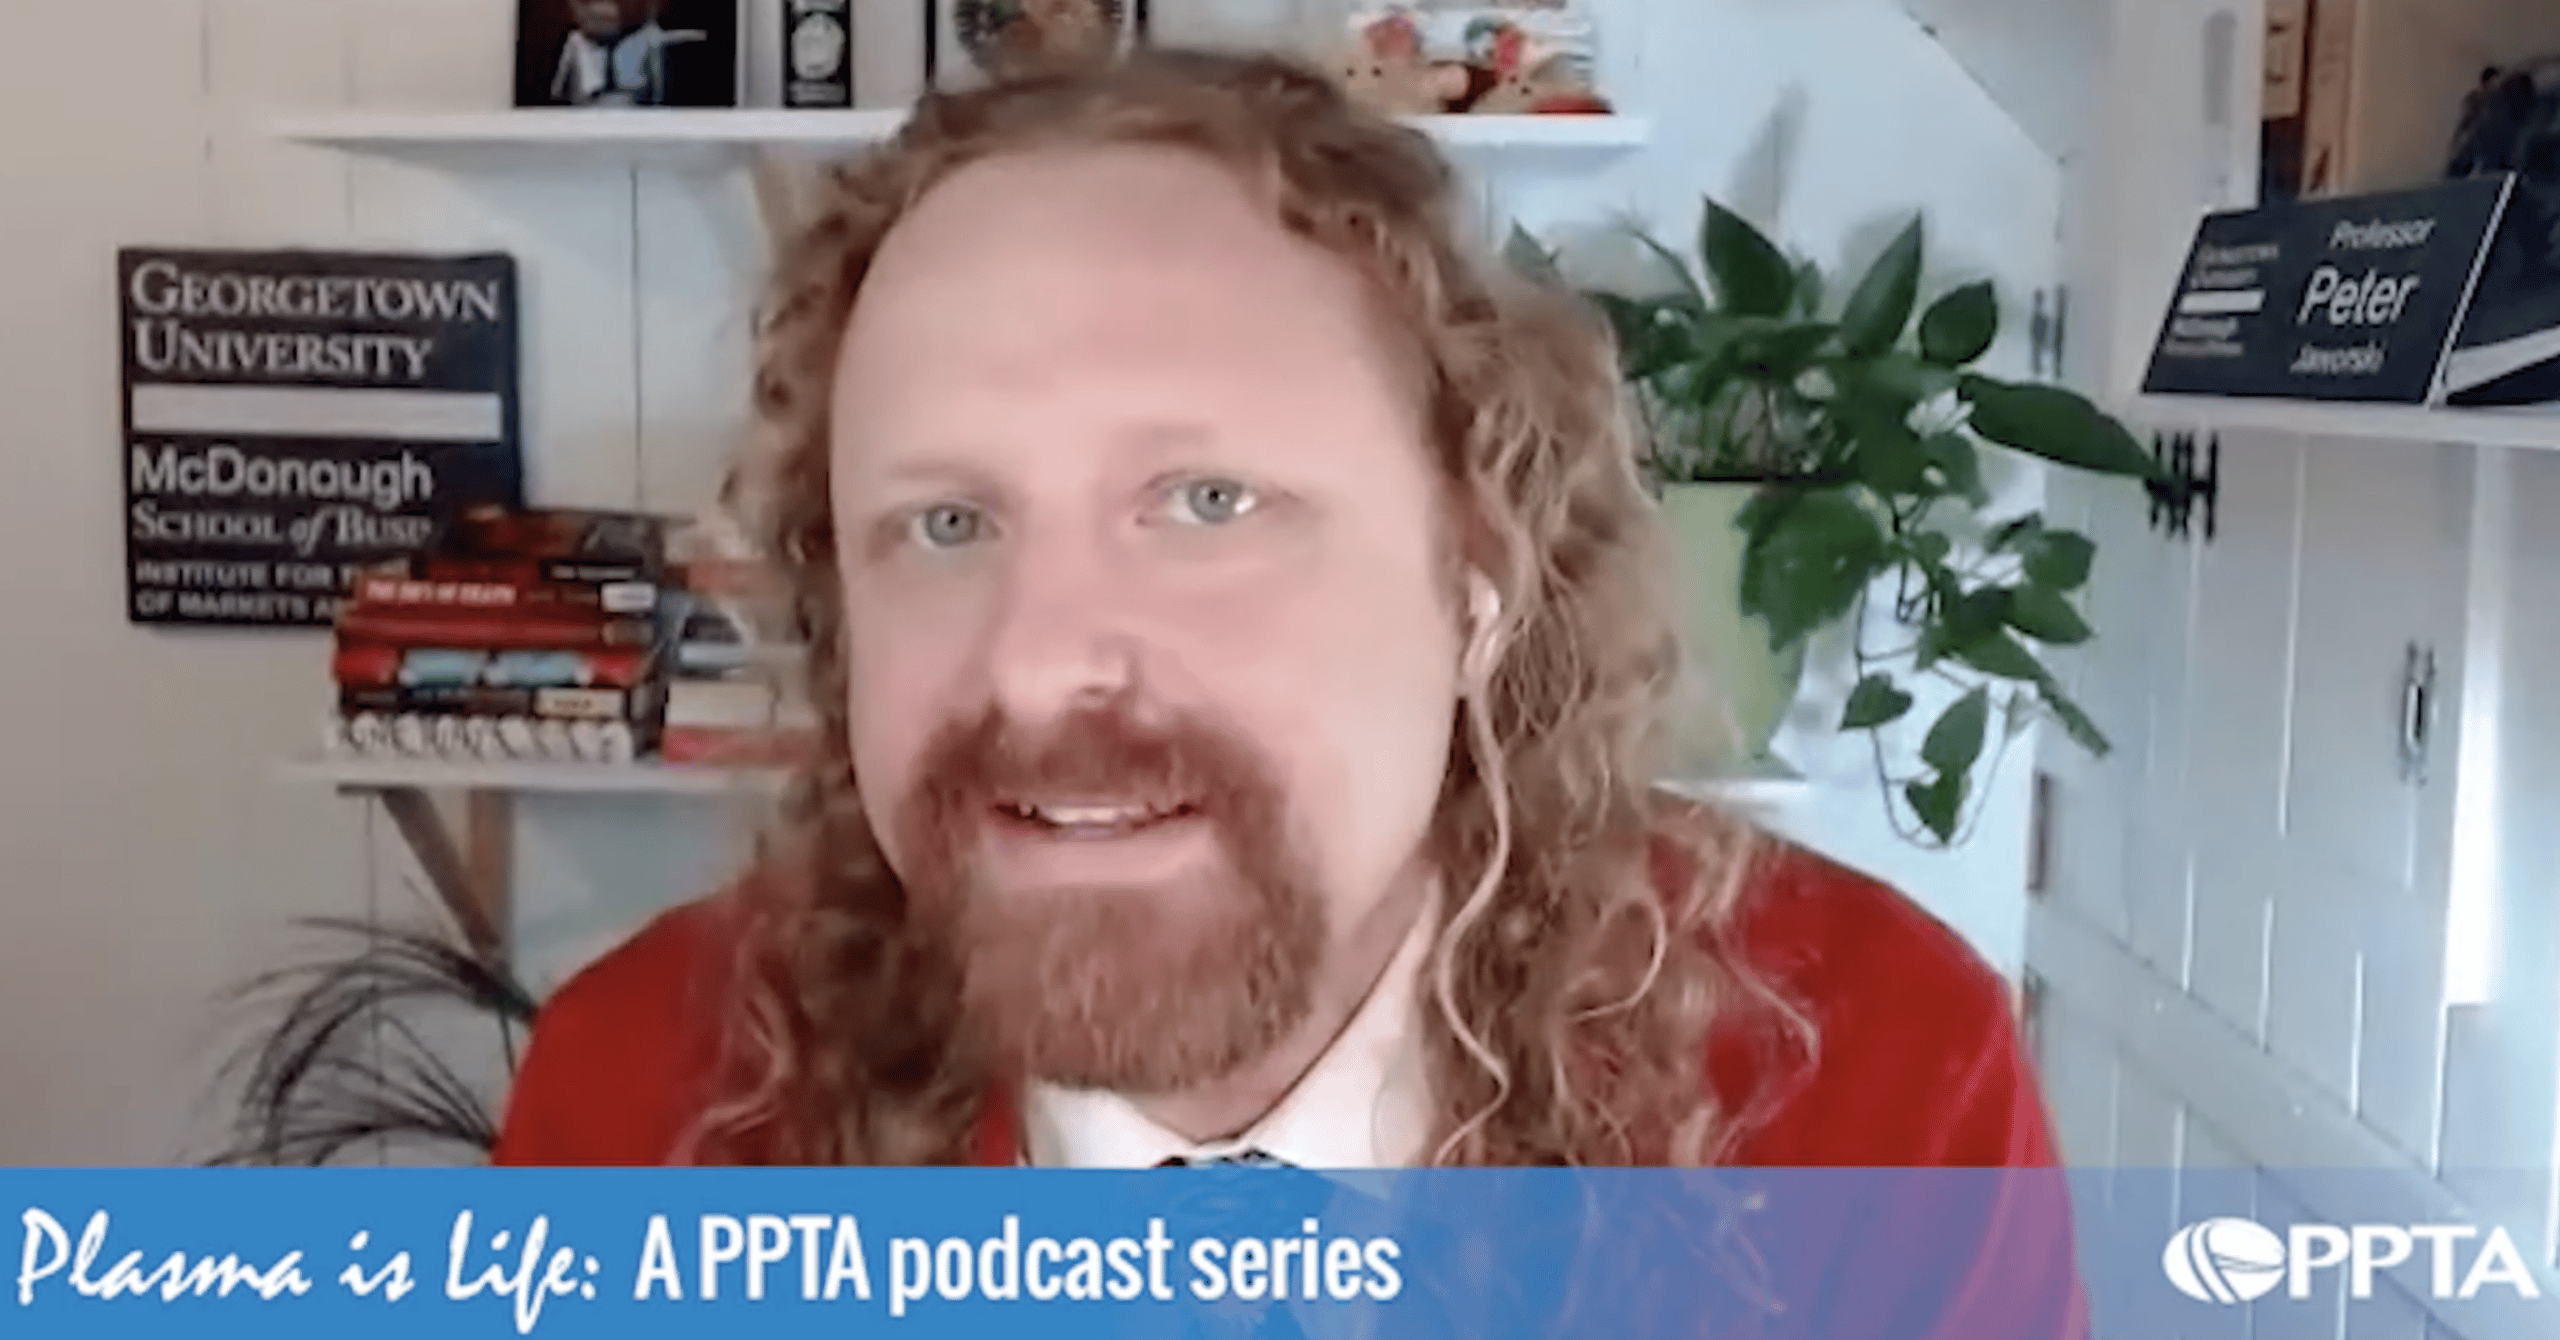 plasma is life podcast screenshot with peter jaworski